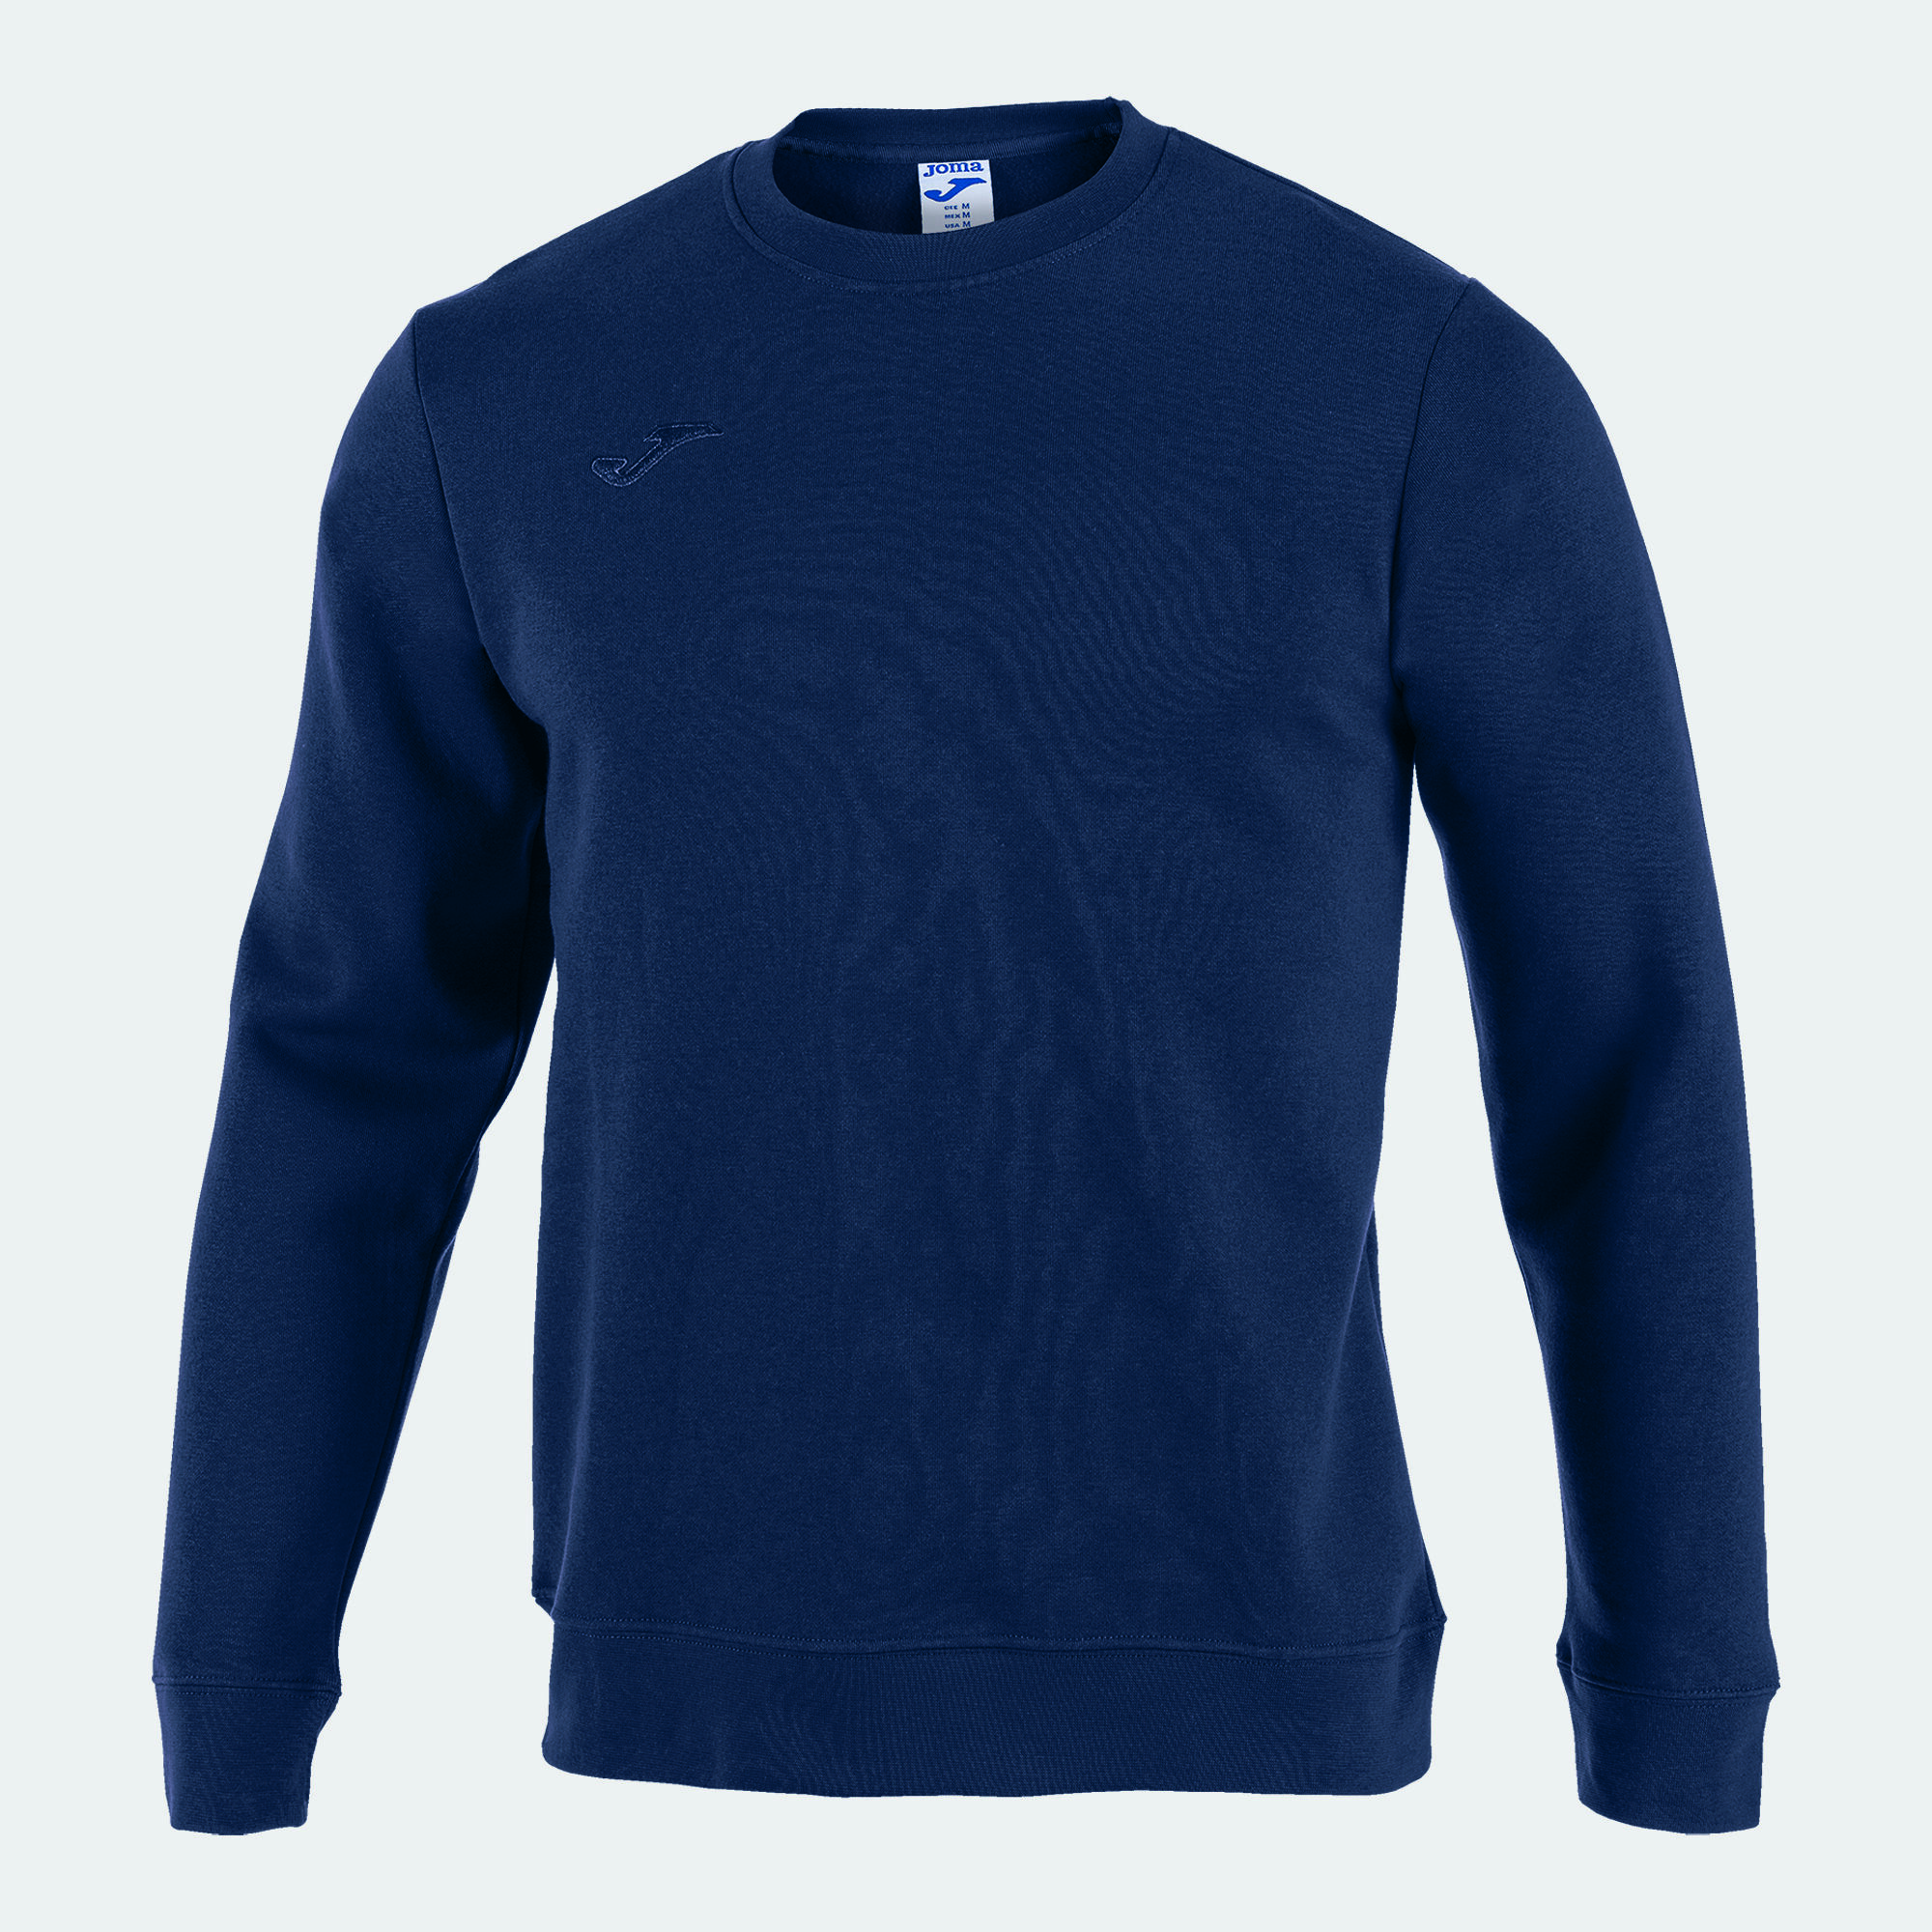 Sweat-shirt homme Santorini bleu marine